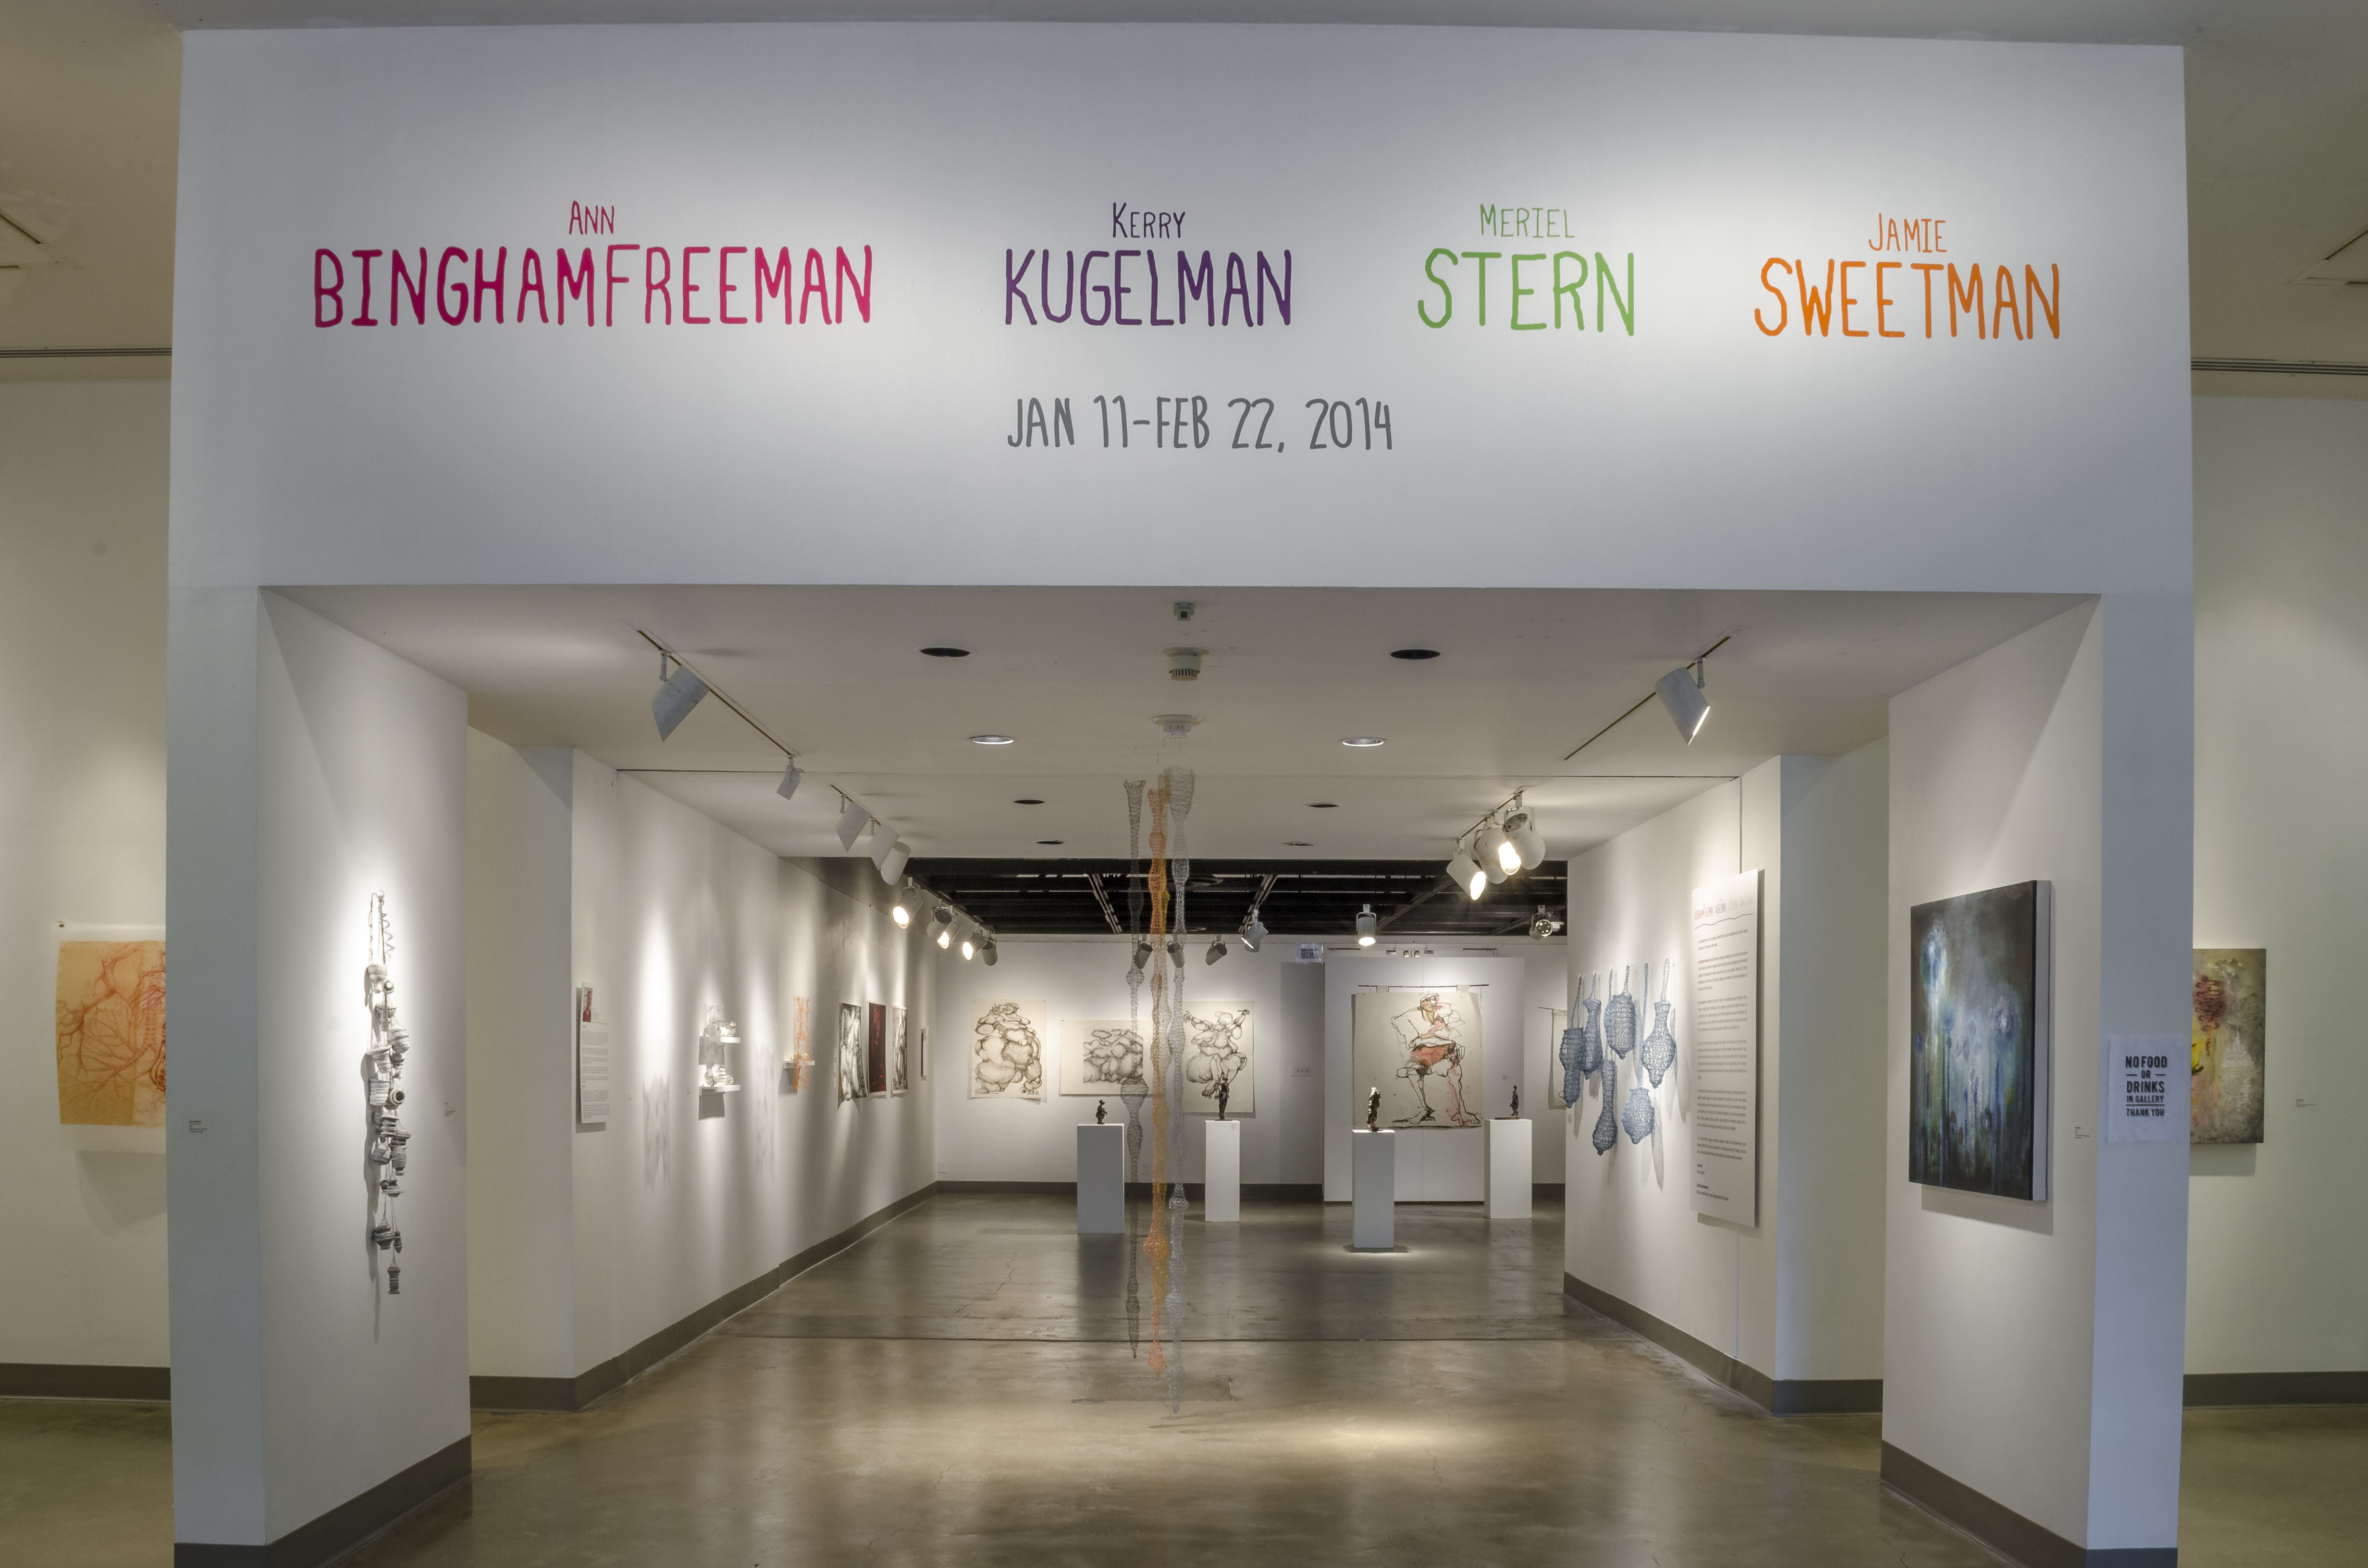 Installation View, Title Wall, Ann Bingham-Freeman, Kerry Kugelman, Meriel Stern & Jamie Sweetman Exhibition, Jan 11 - Feb 22, 2014.